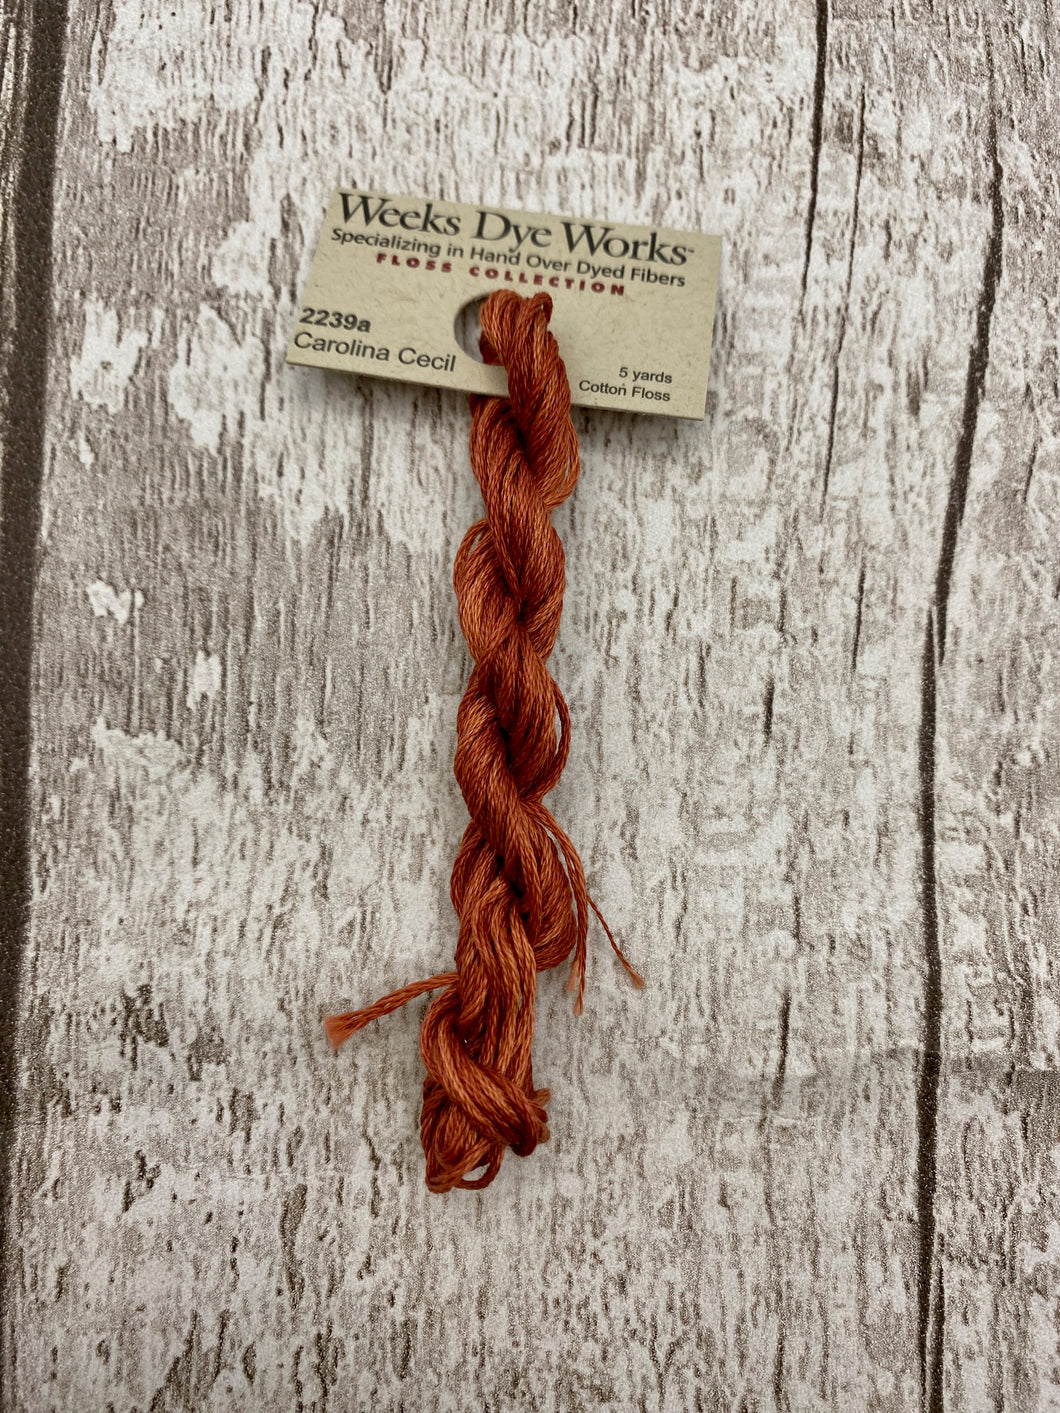 Carolina Cecil (#2239a) Weeks Dye Works 6-strand cotton floss